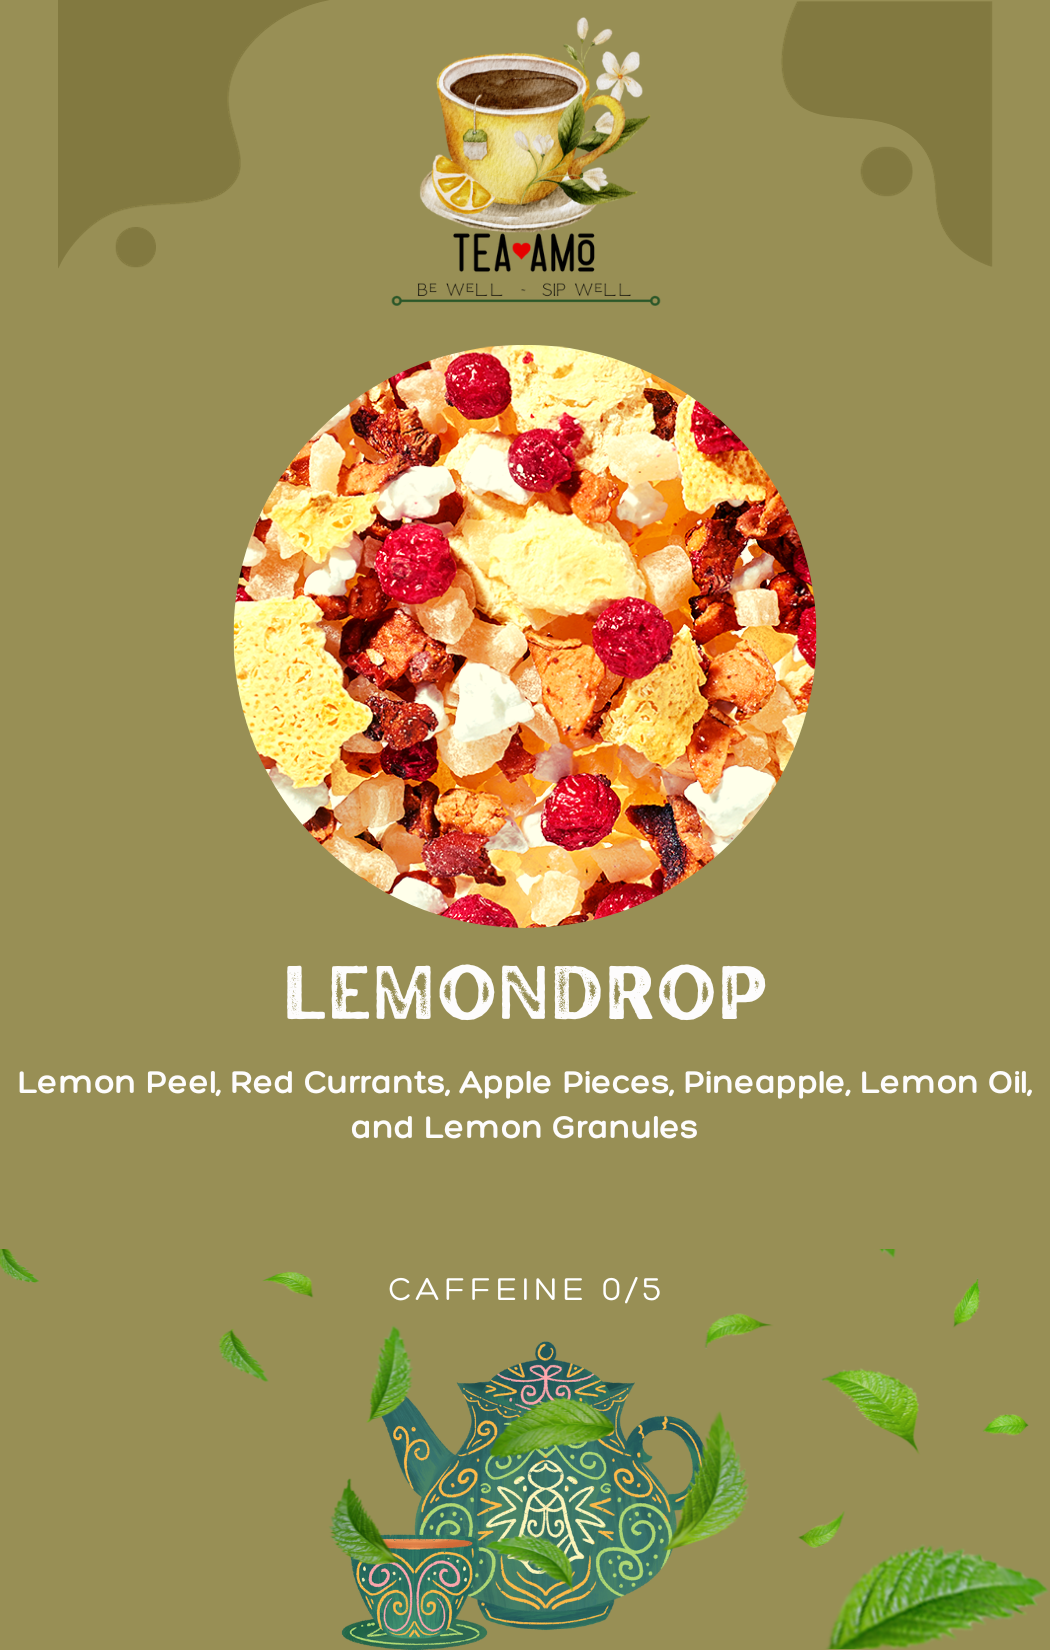 Tea Amo Wellness: Lemondrop